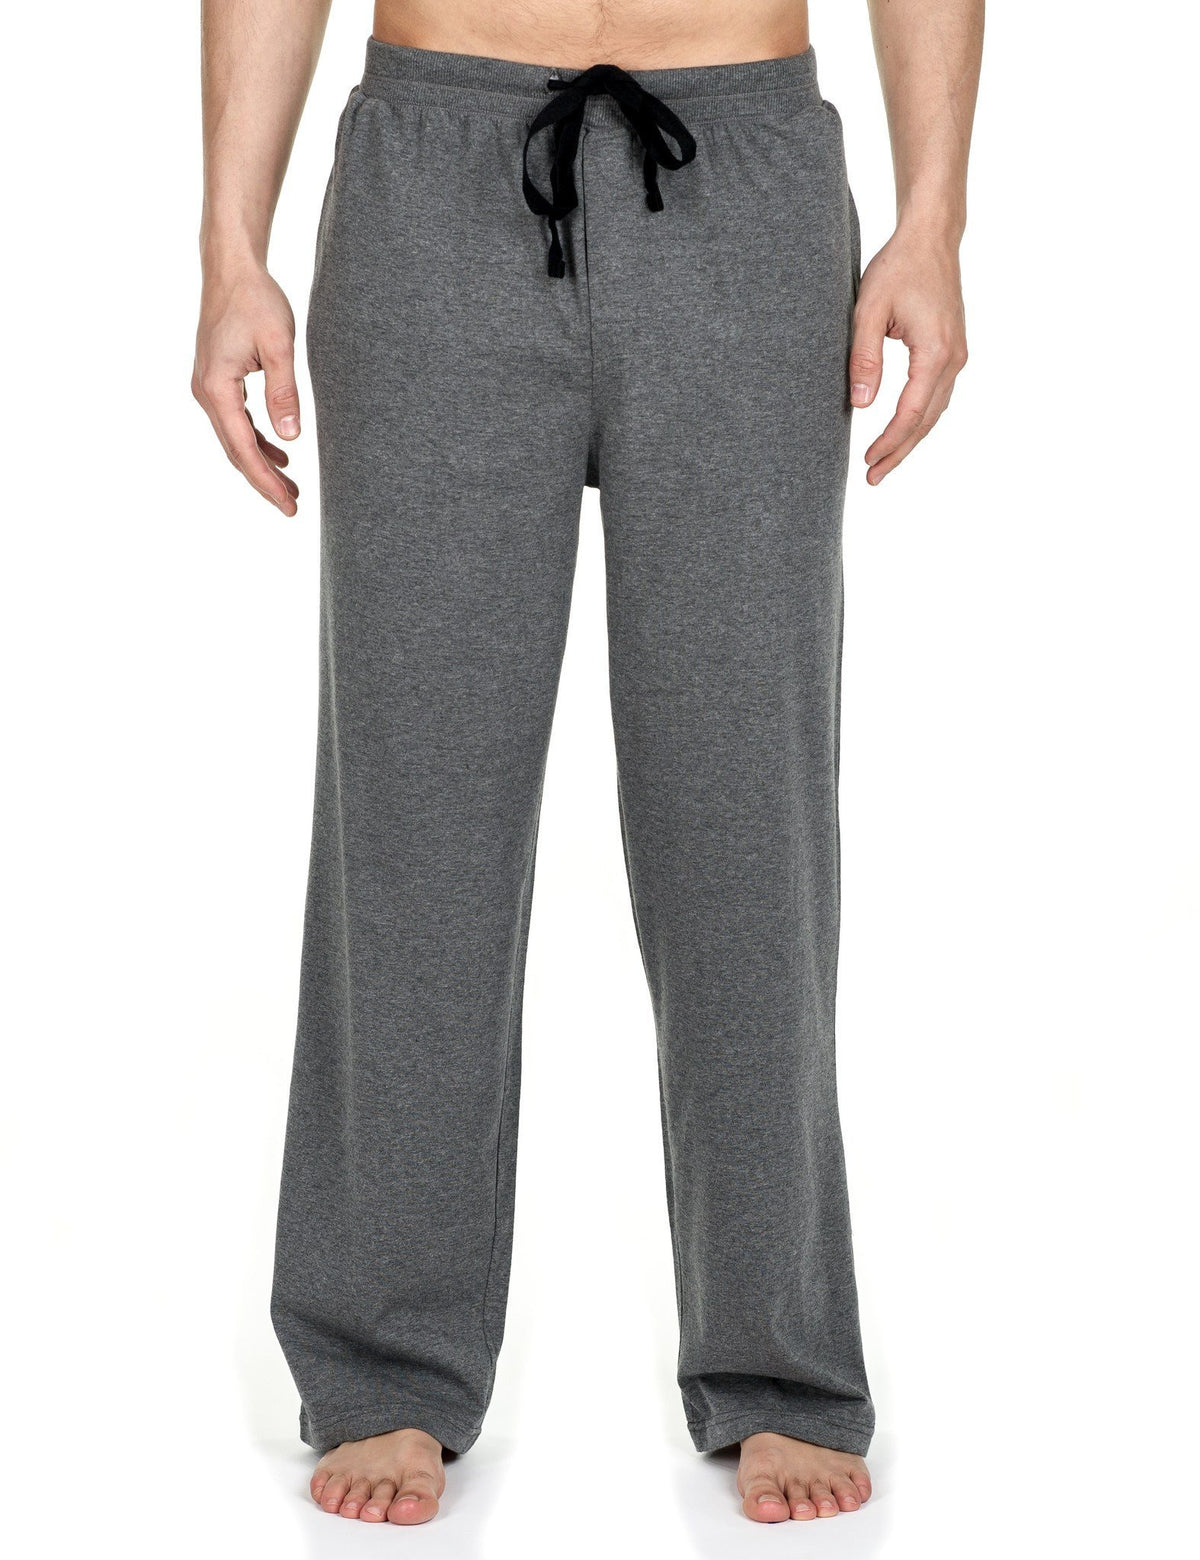 Men's Premium Knit Lounge/Sleep Pants - Charcoal